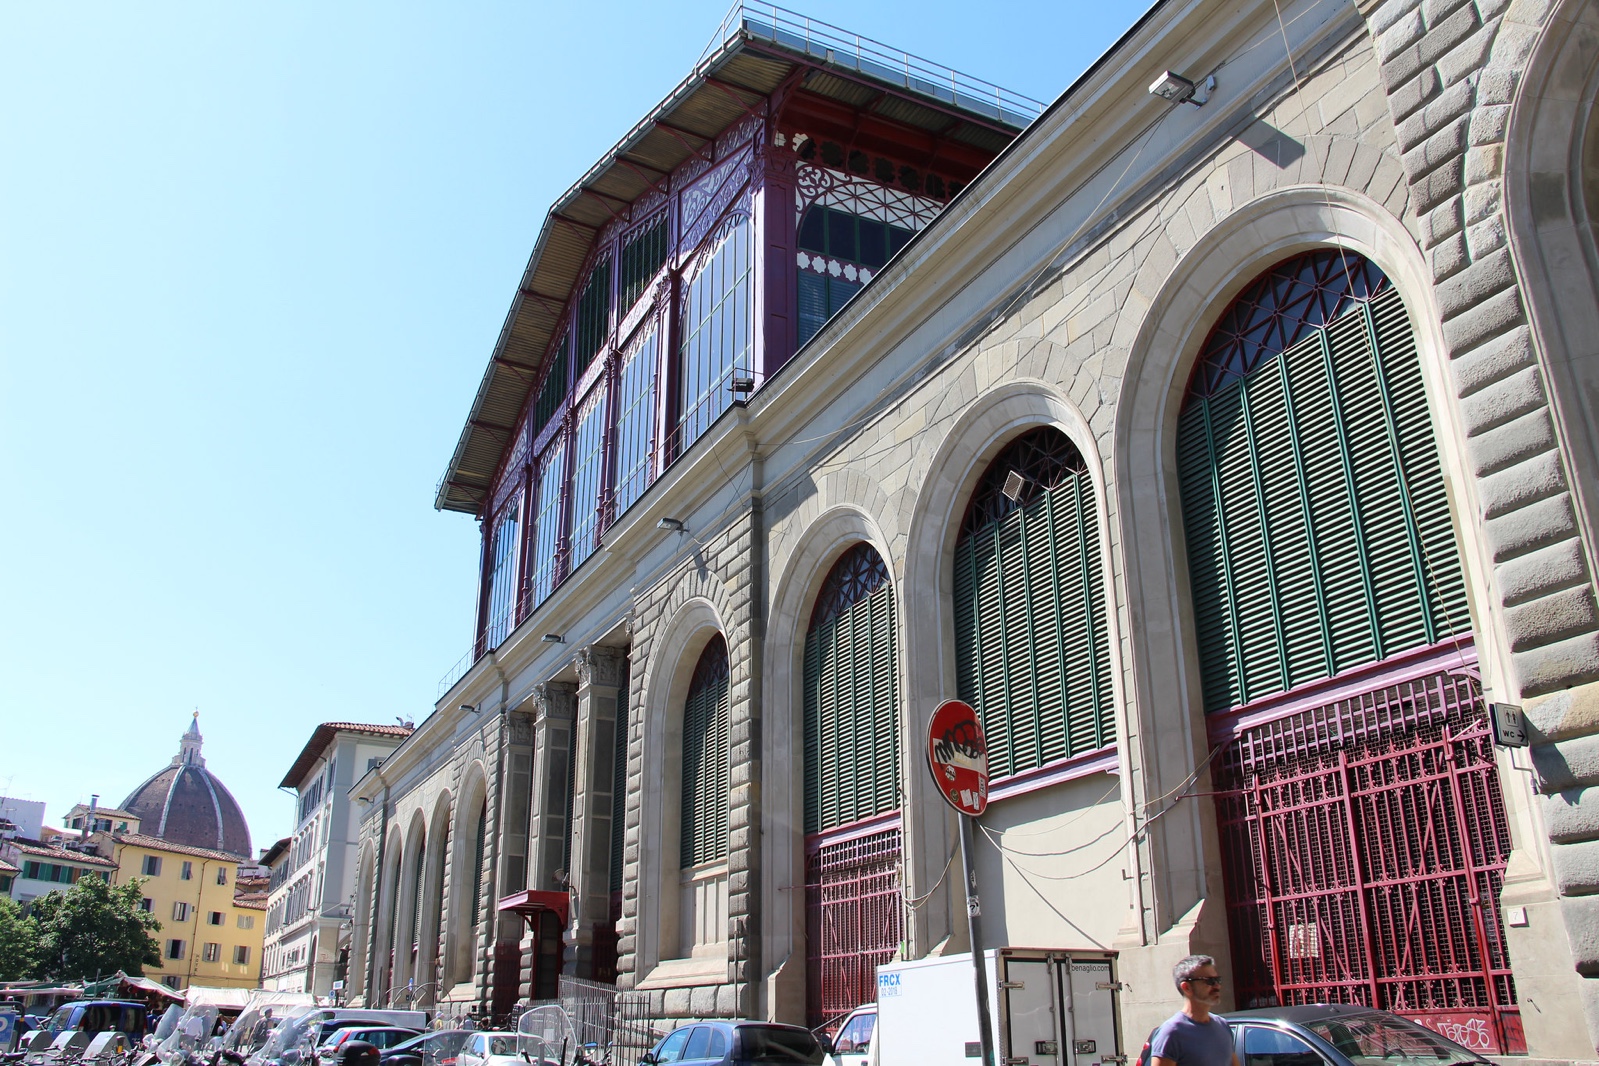 San Lorenzo central market